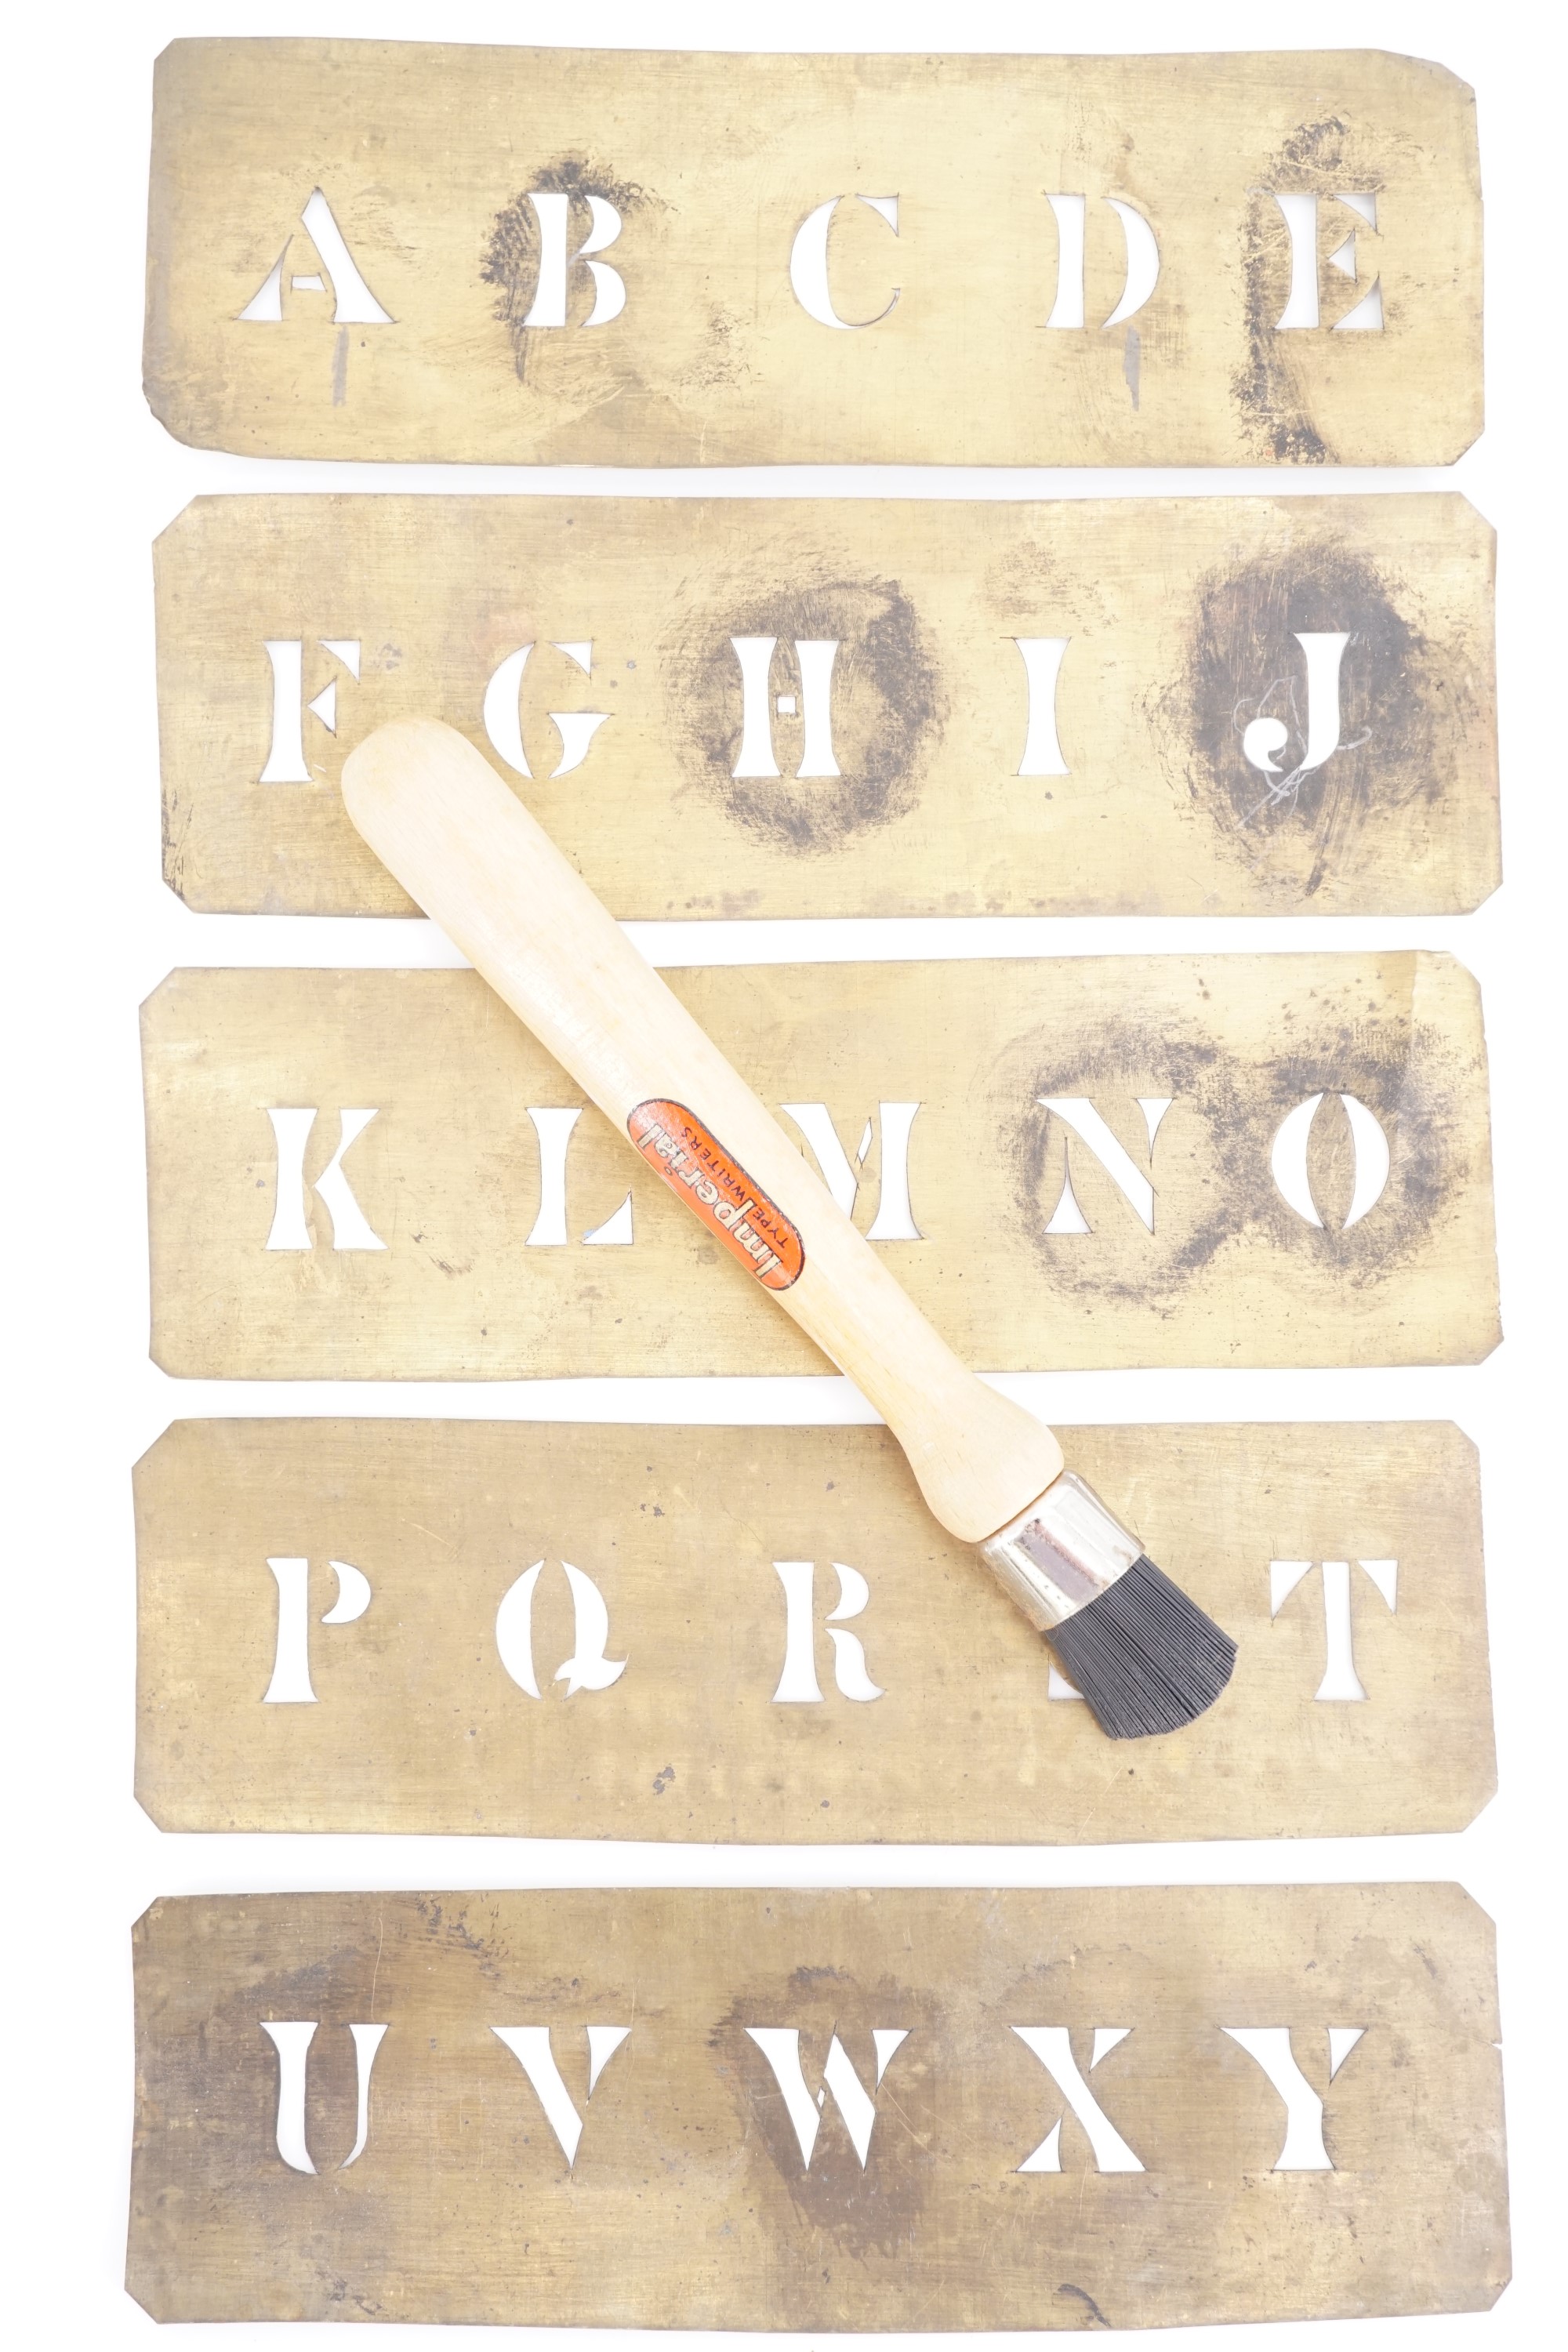 Antique brass alphabet stencils together with a brush